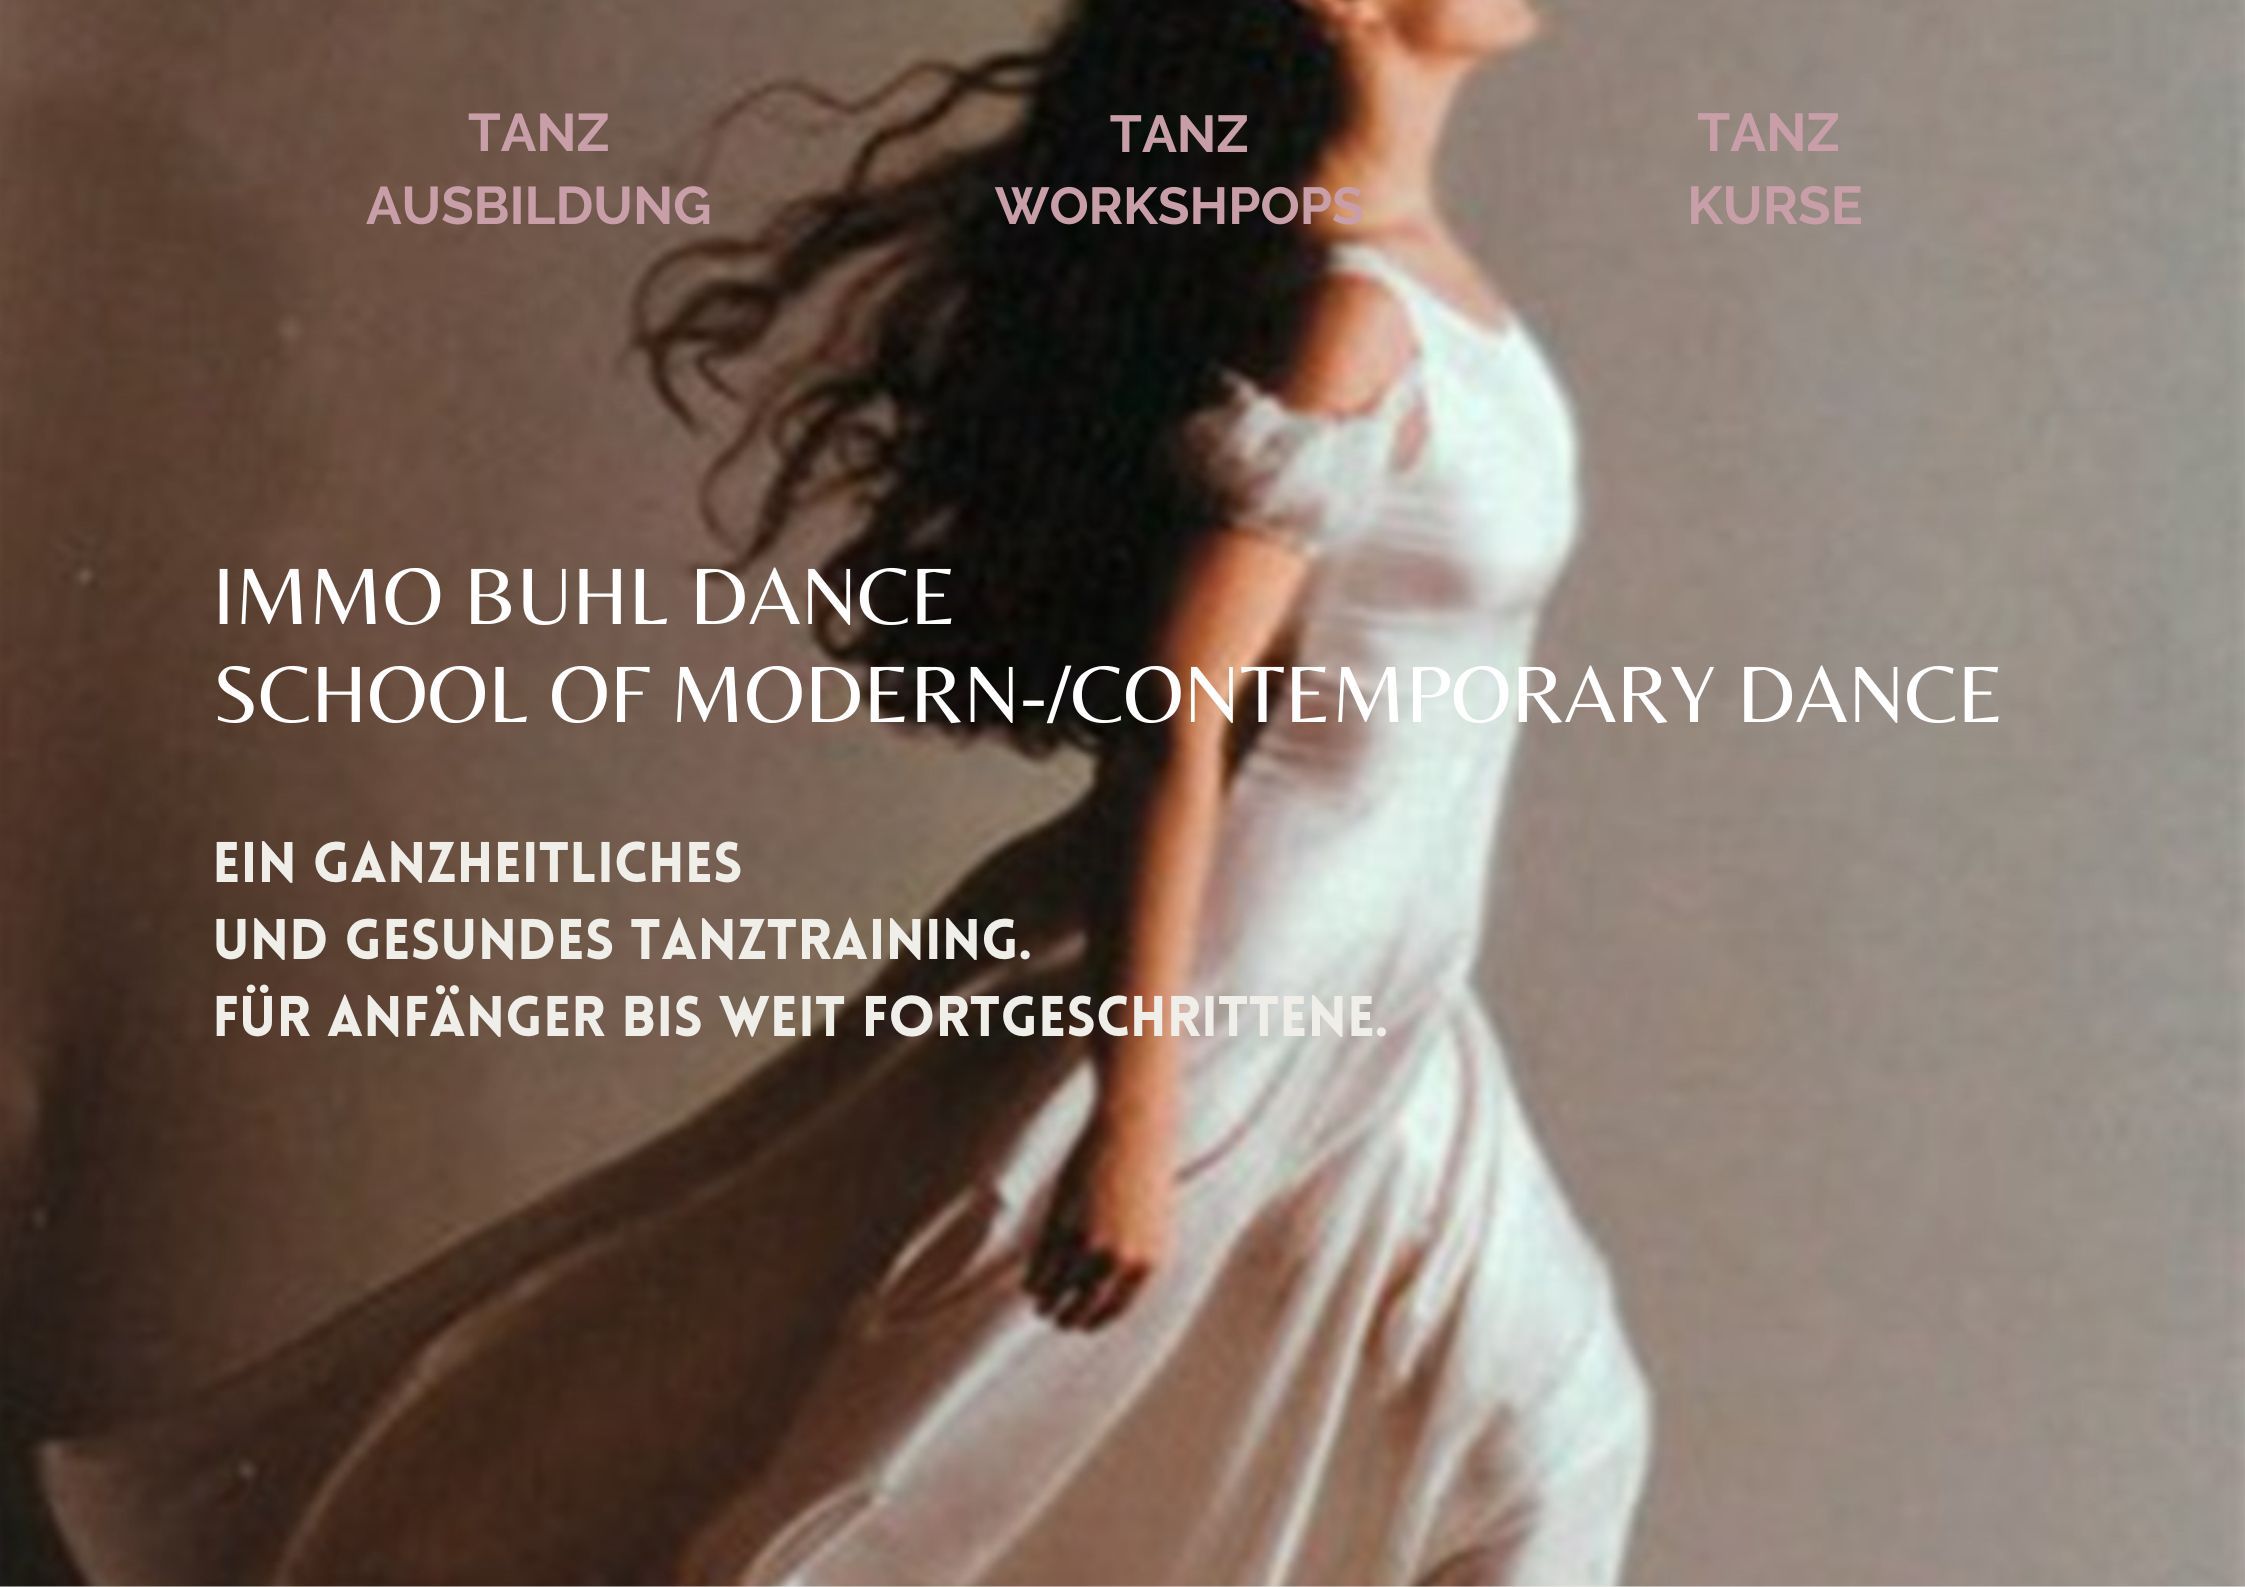 Immo Buhl & Lará Buhl free school of dance renewal / tanzerneuerung in modern dance contemporary dance in Nürnberg / Germany